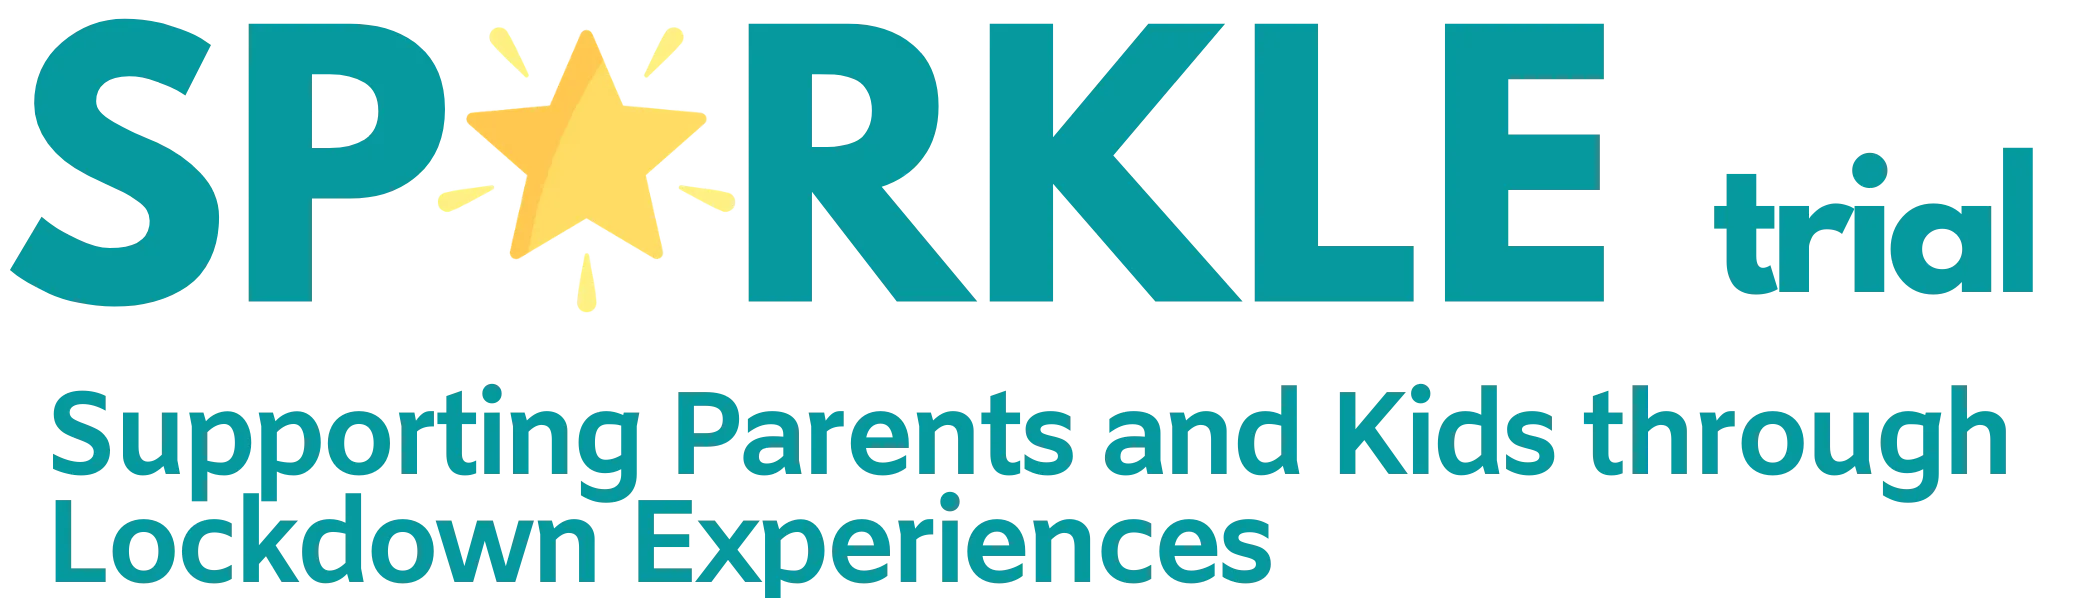 SPARKLE logo_large